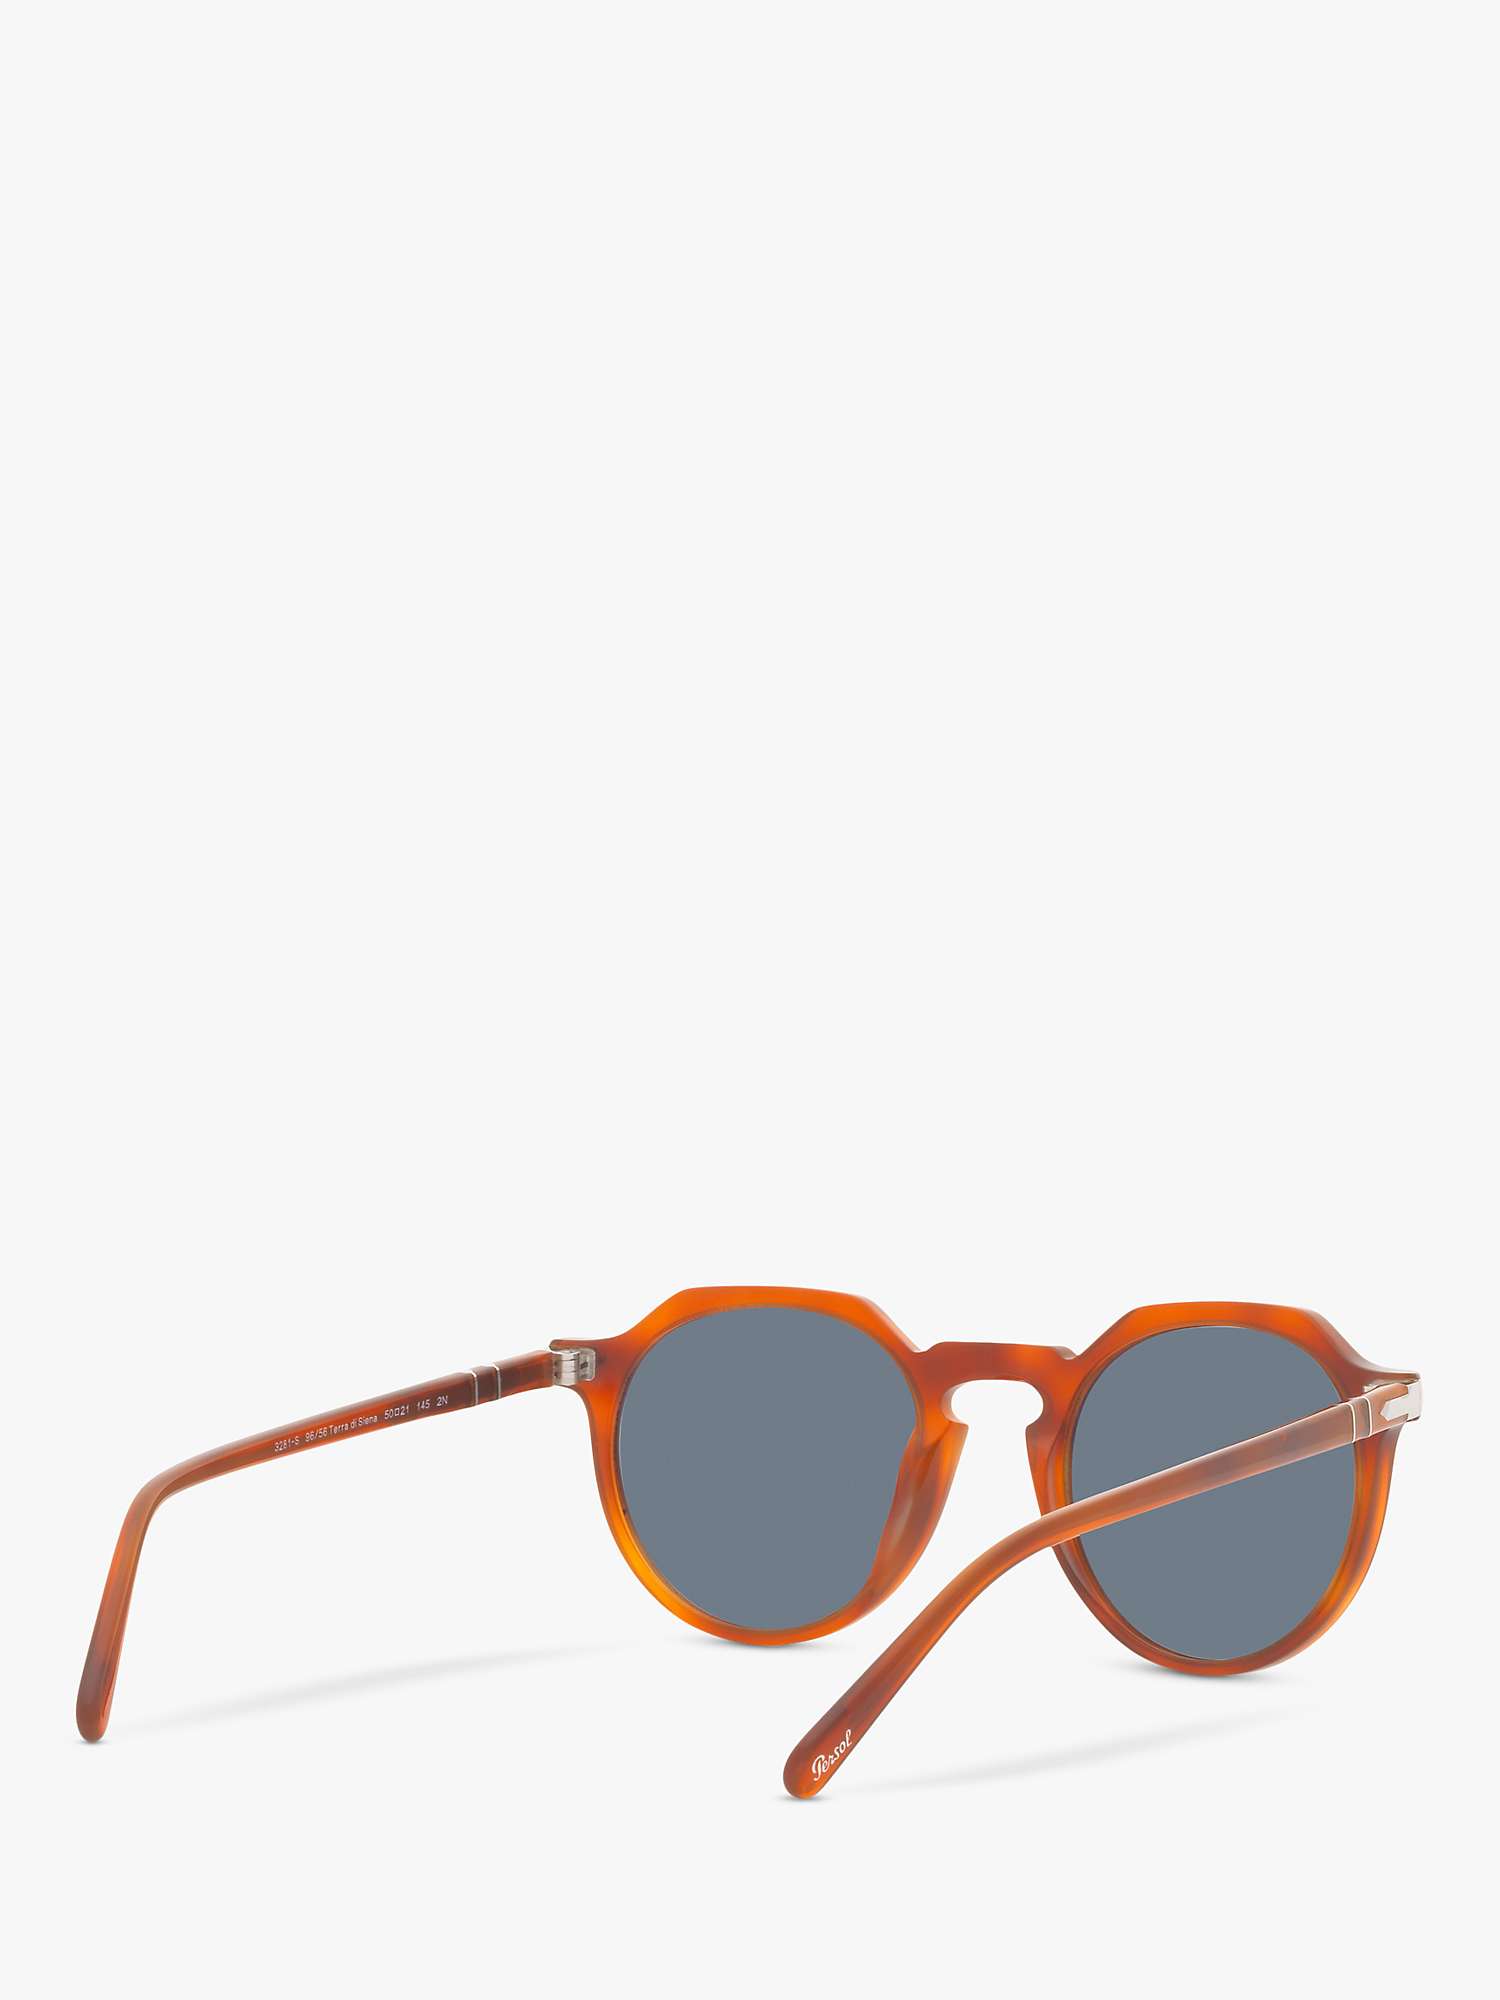 Buy Persol PO3281S Unisex Oval Sunglasses, Terra di Siena/Blue Online at johnlewis.com